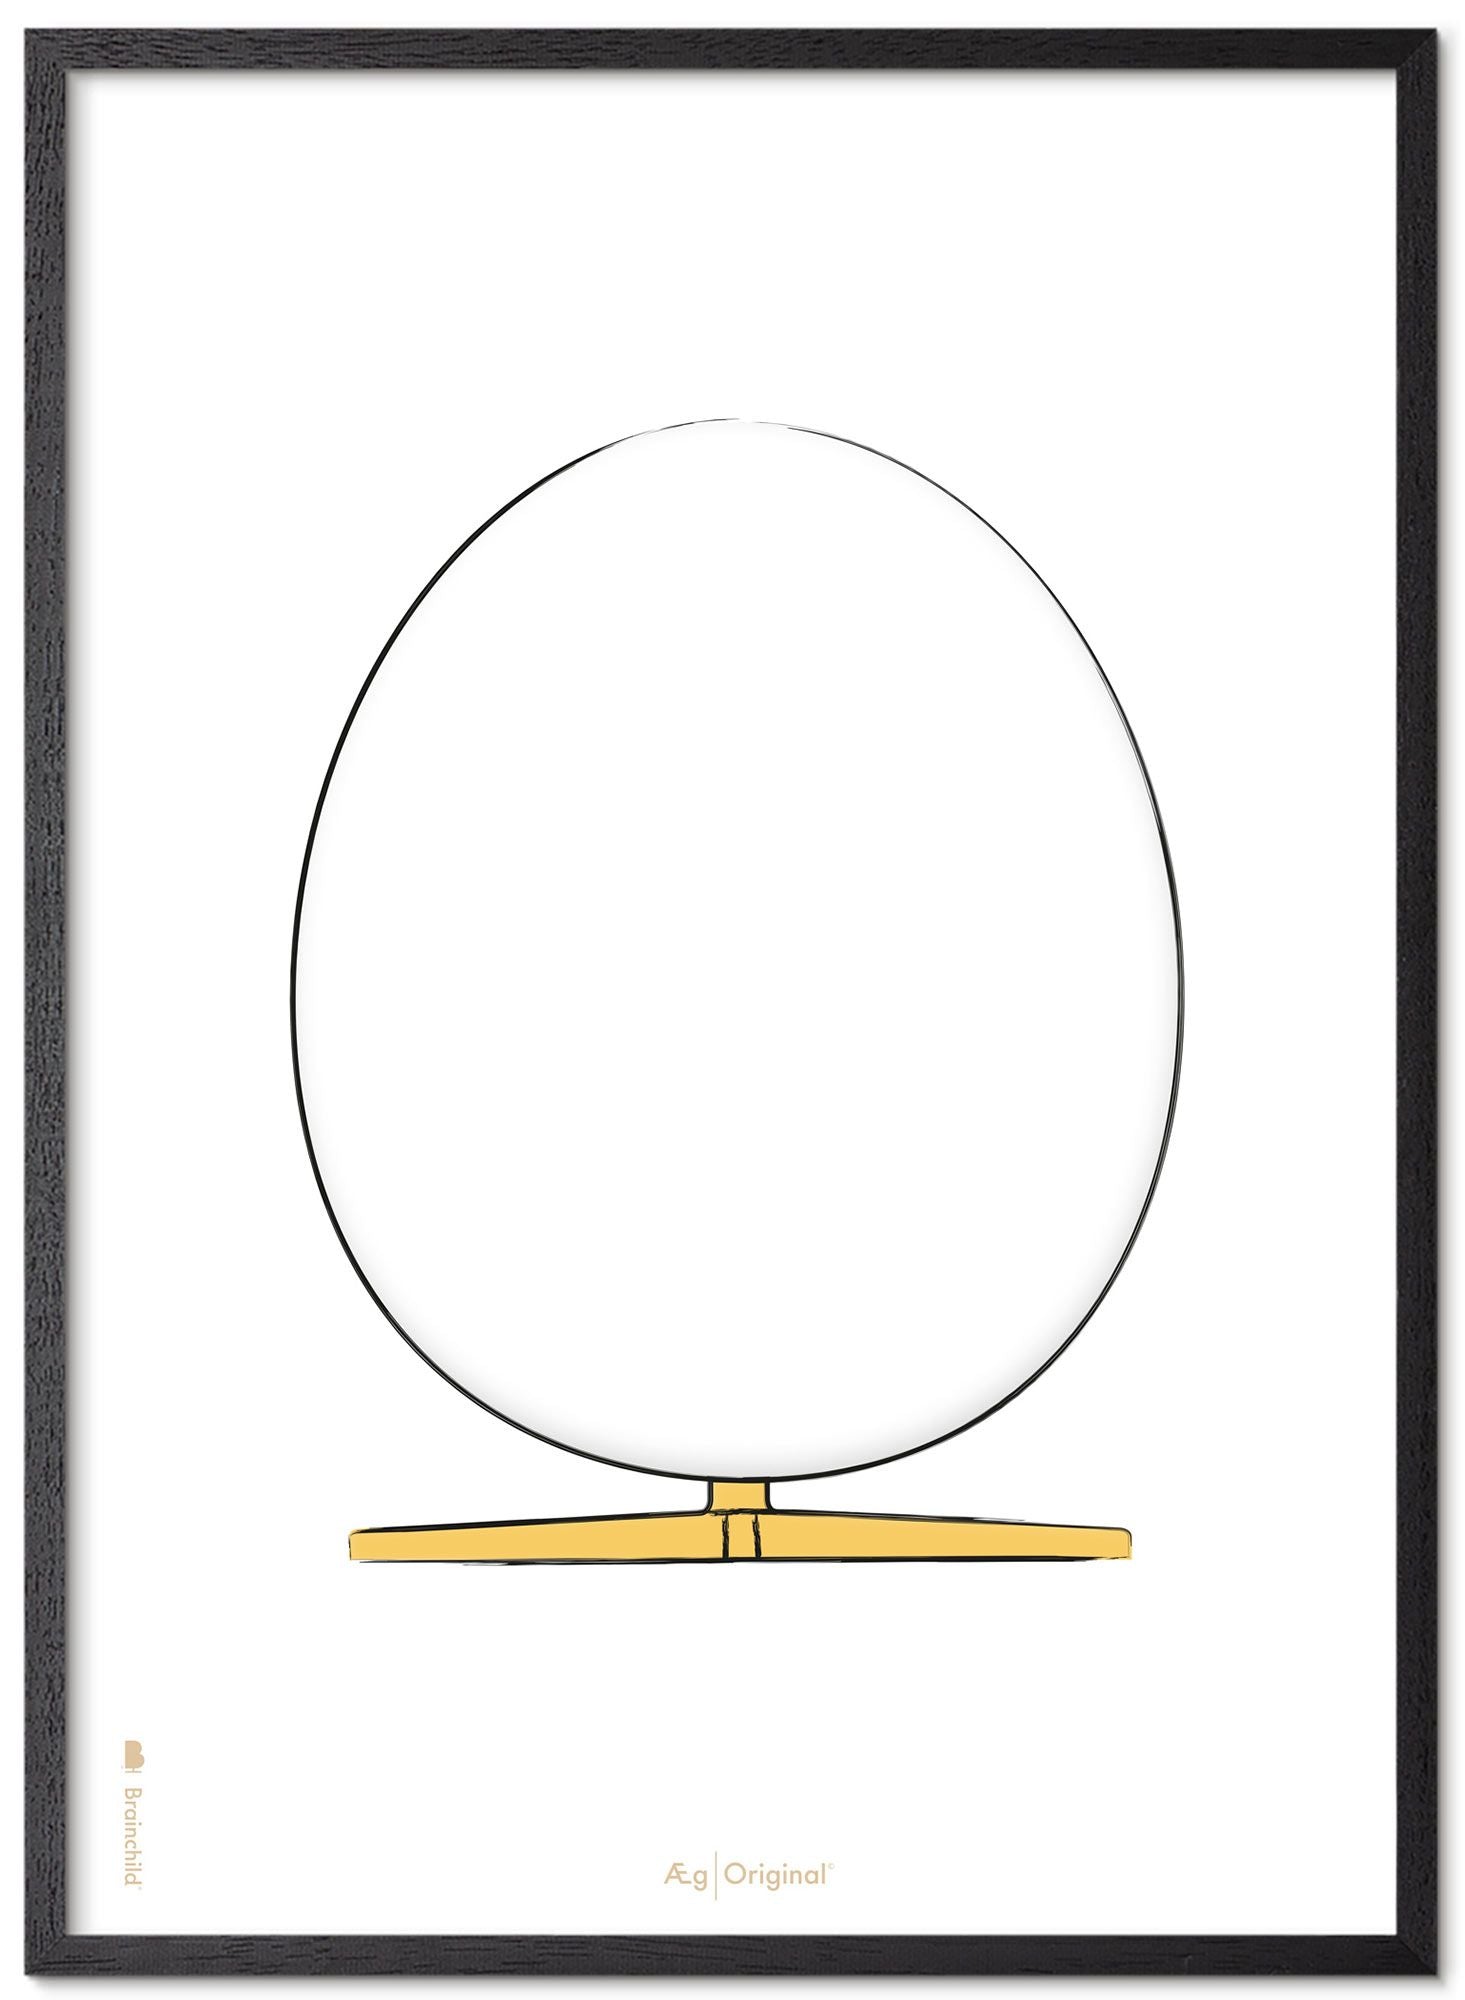 Brainchild The Egg Design Sketch Poster Frame Made Of Black Lacquered Wood 70x100 Cm, White Background